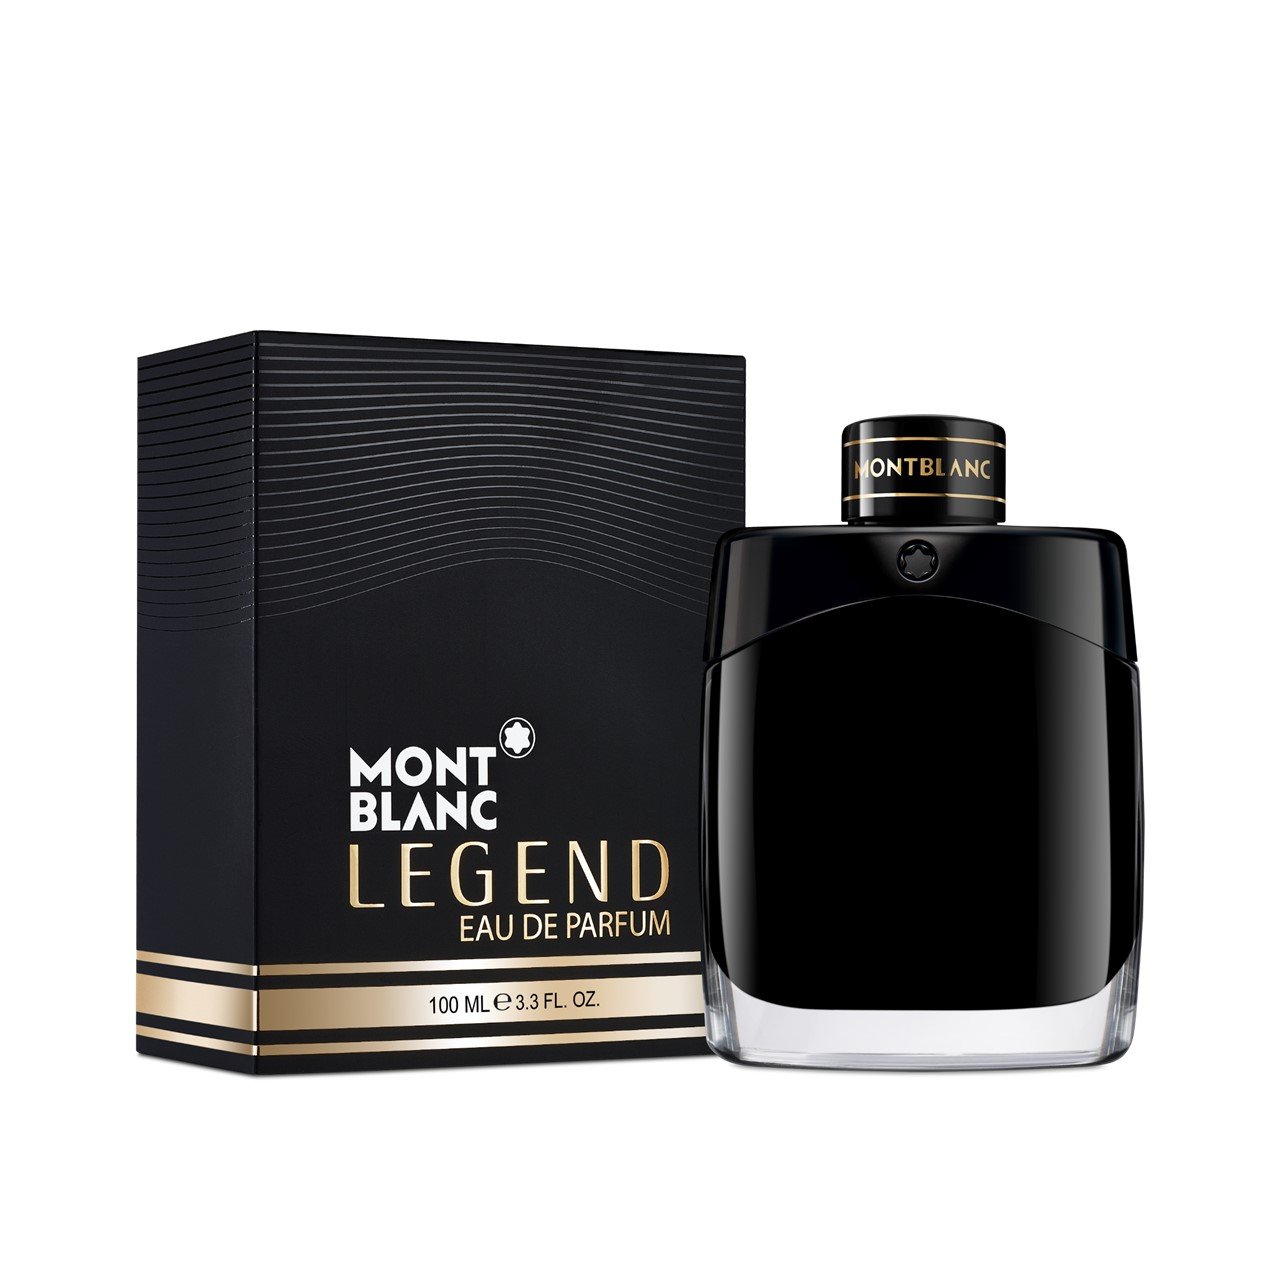 https://static.beautytocare.com/media/catalog/product/m/o/montblanc-legend-eau-de-parfum-100ml.jpg